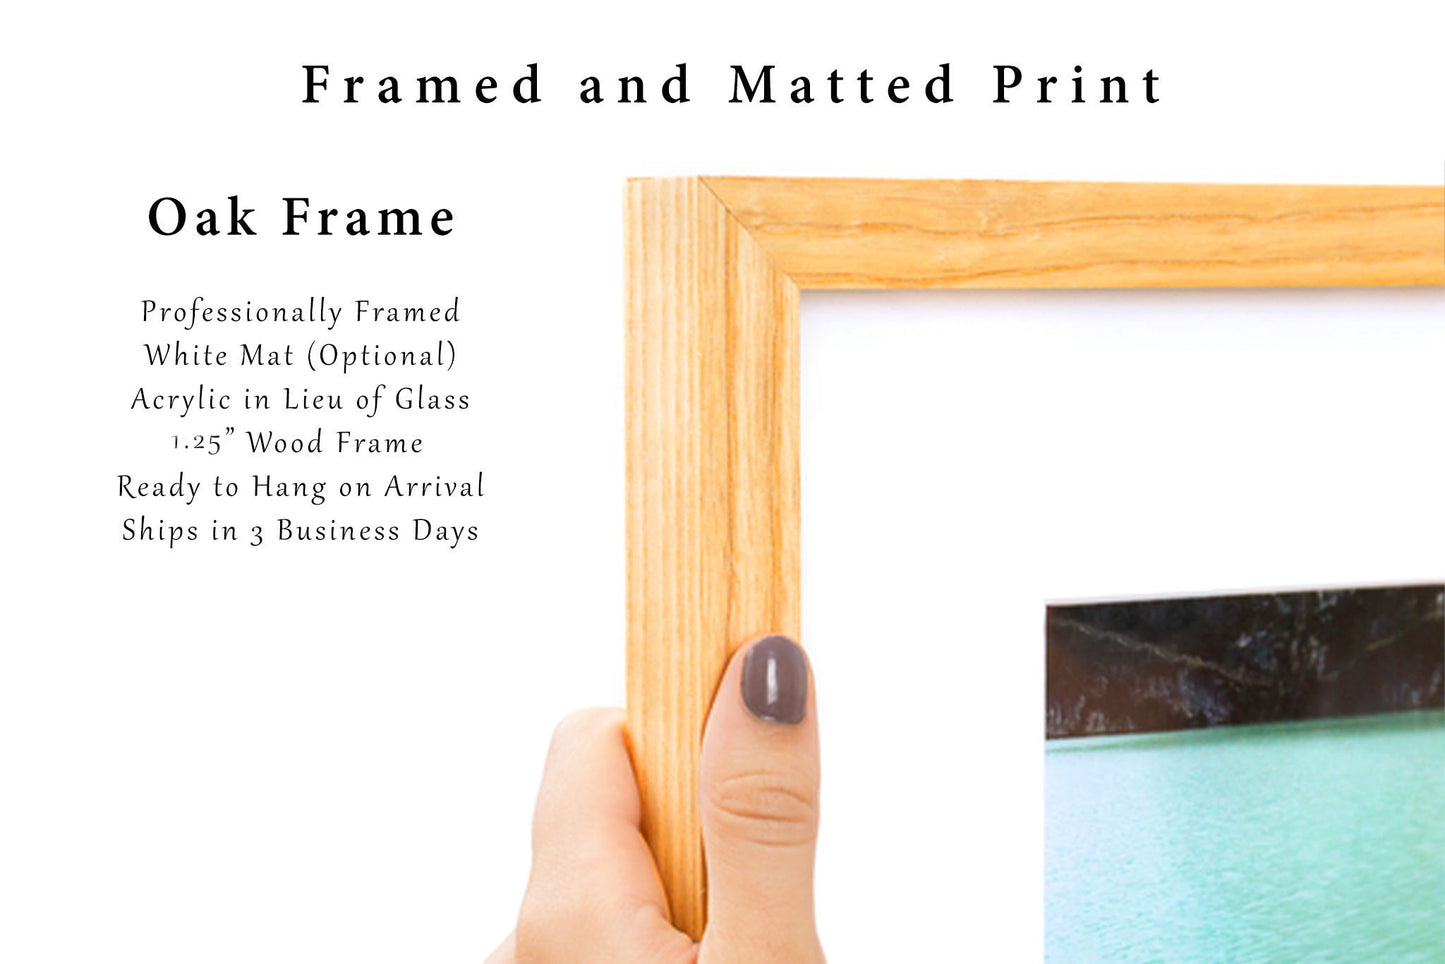 Joshua Tree Framed and Matted Print | Desert Photo | Black and White Decor | Arizona Photography | Southwestern Wall Art | Ready to Hang